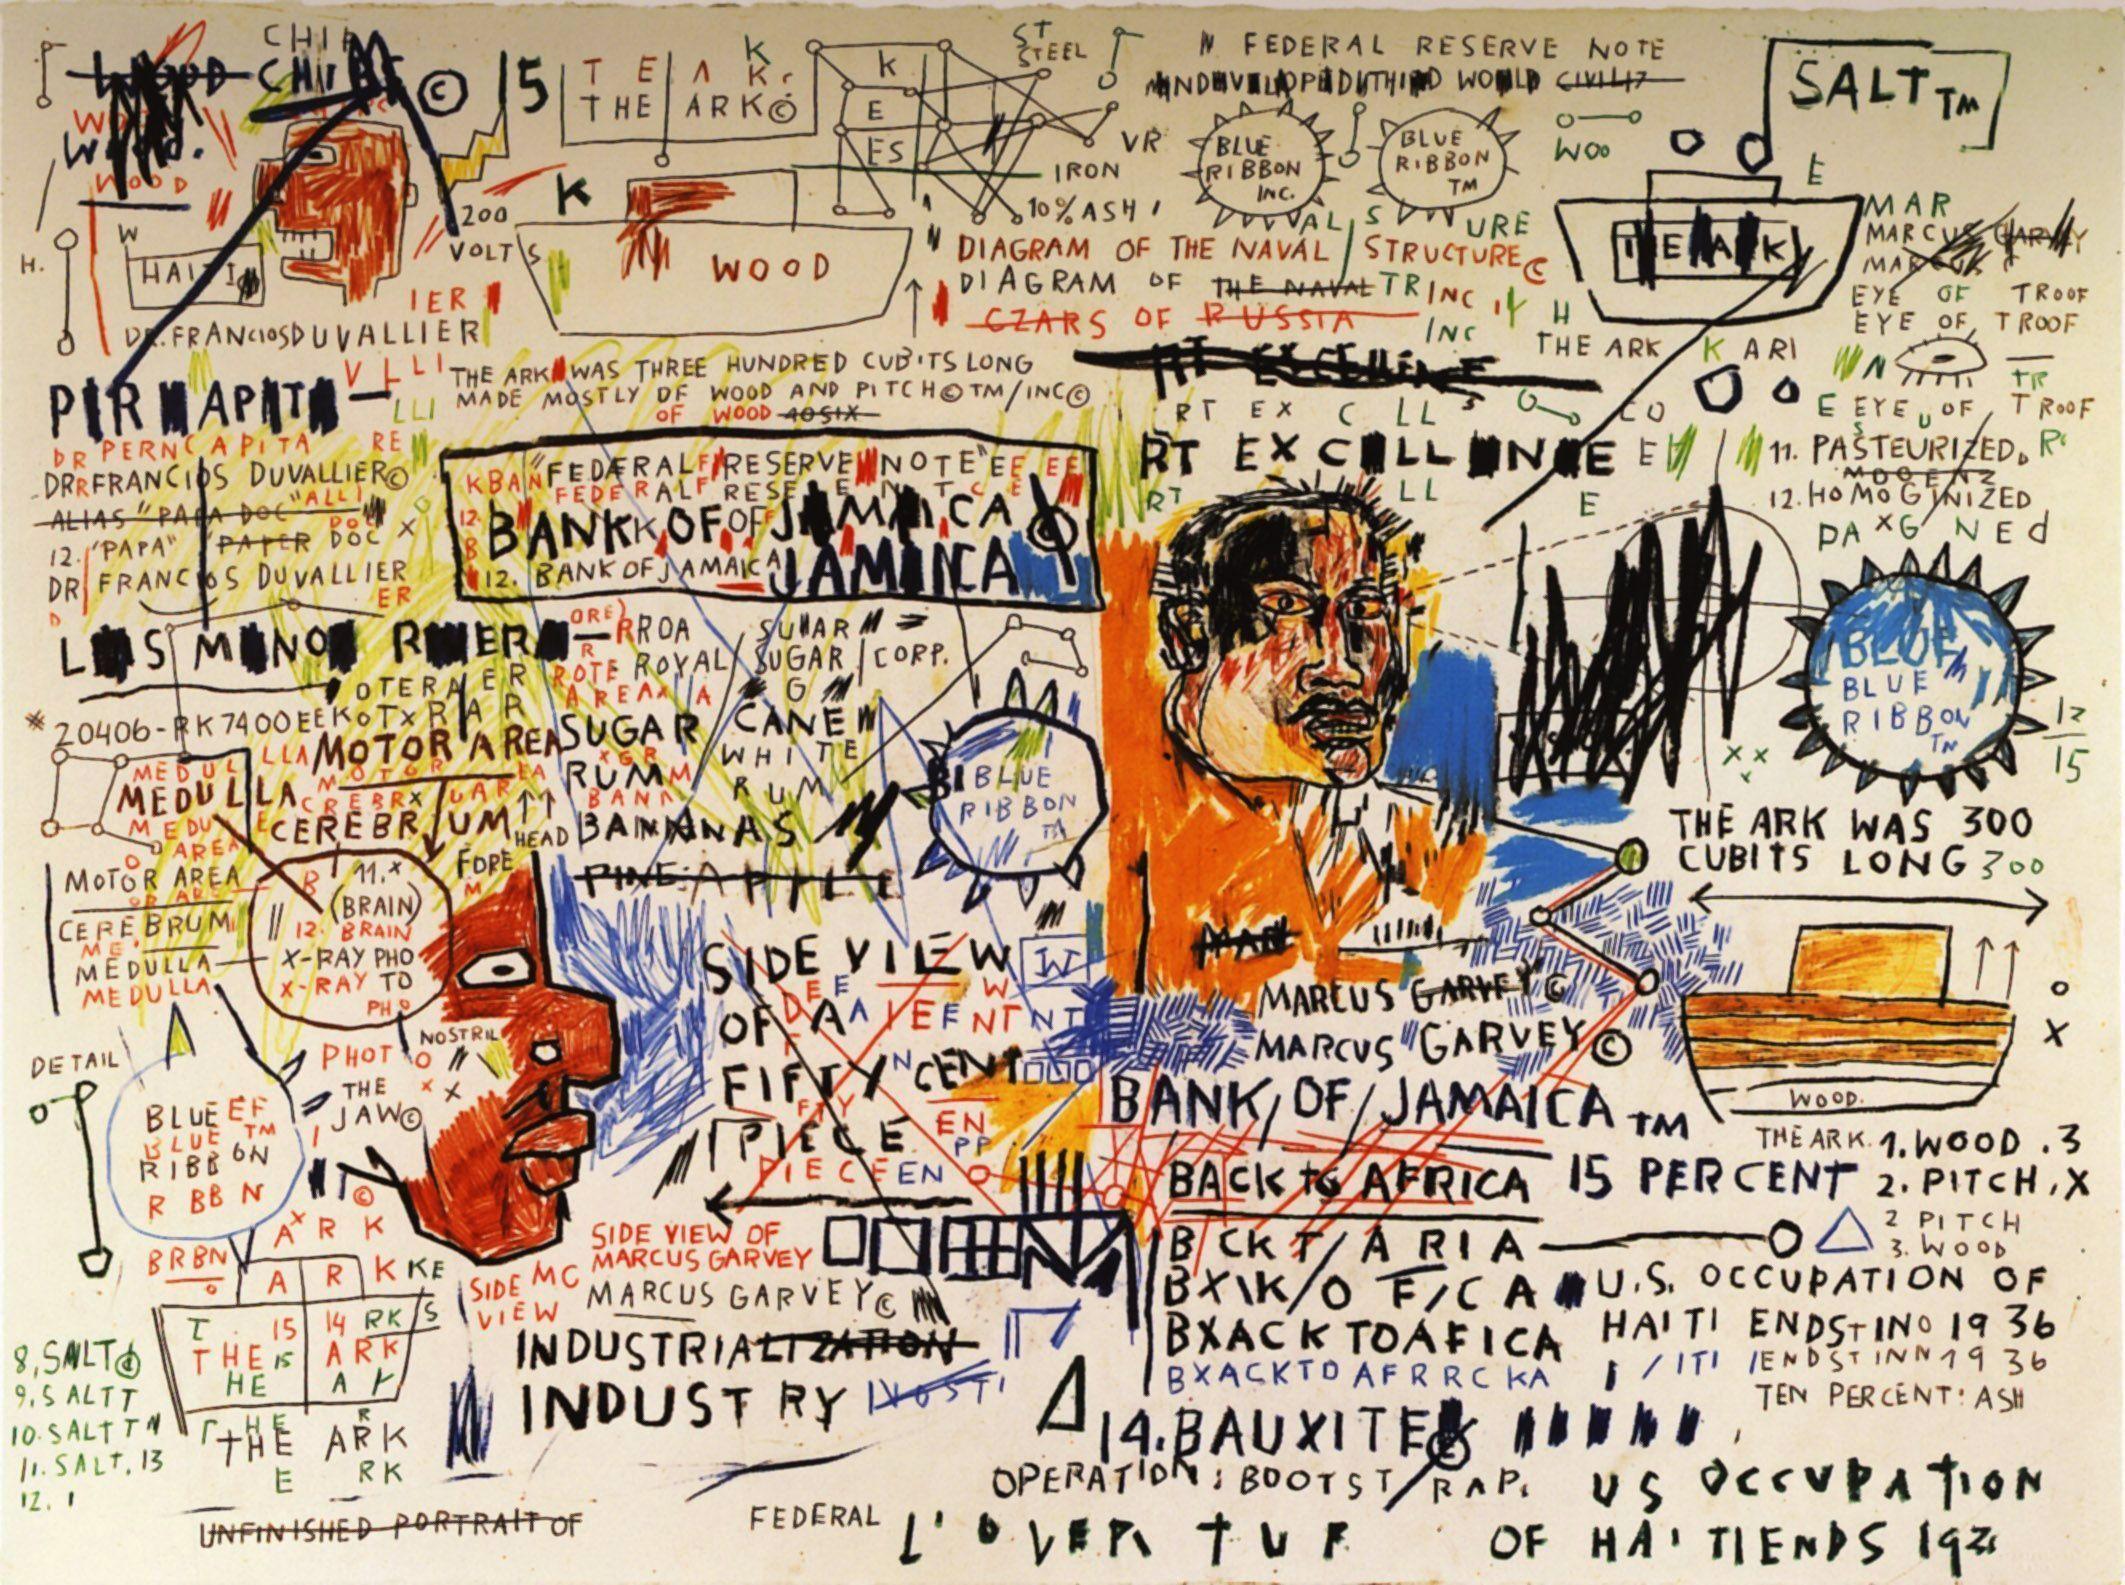 [71+] Basquiat Wallpaper on WallpaperSafari